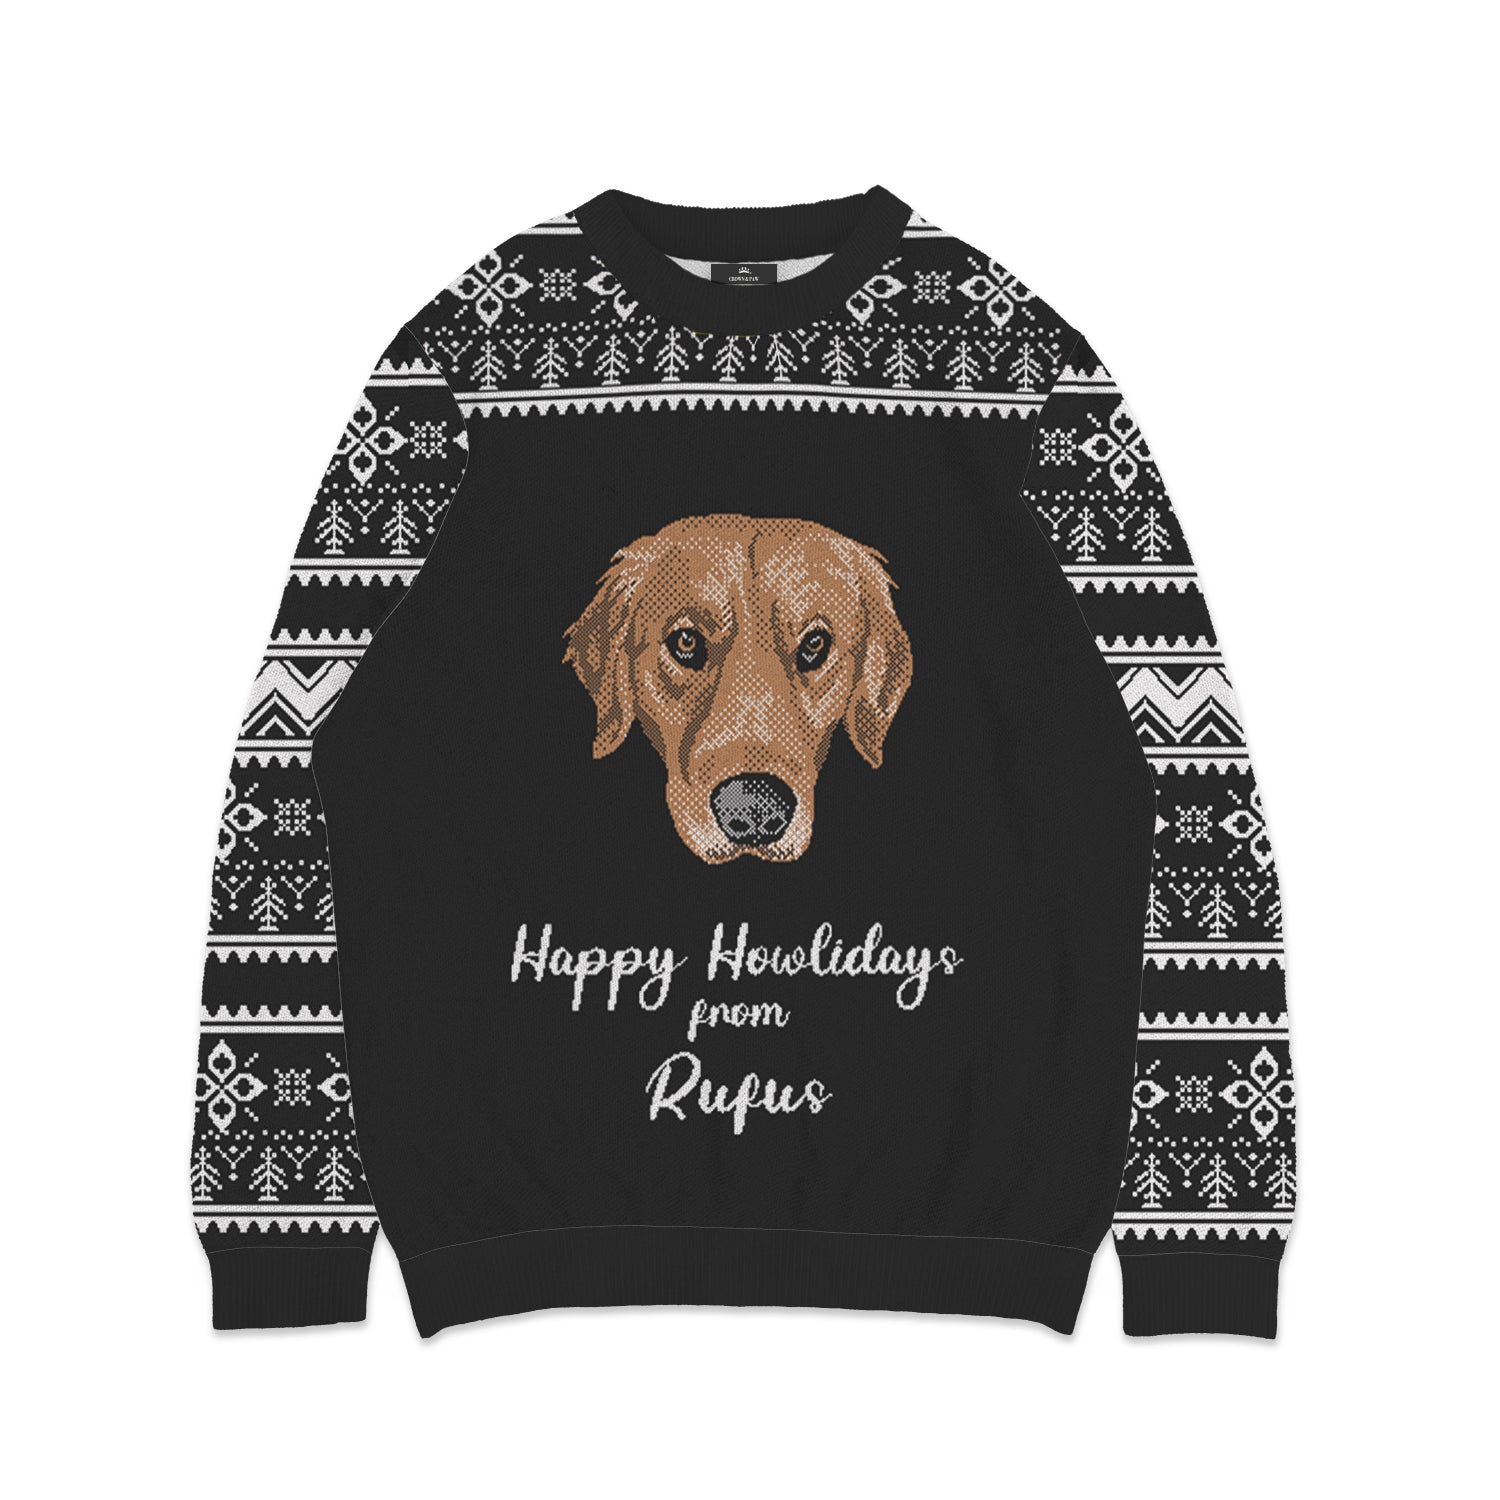 Fair Isle Pattern Dog Face Sweater - Custom Christmas Knitwear